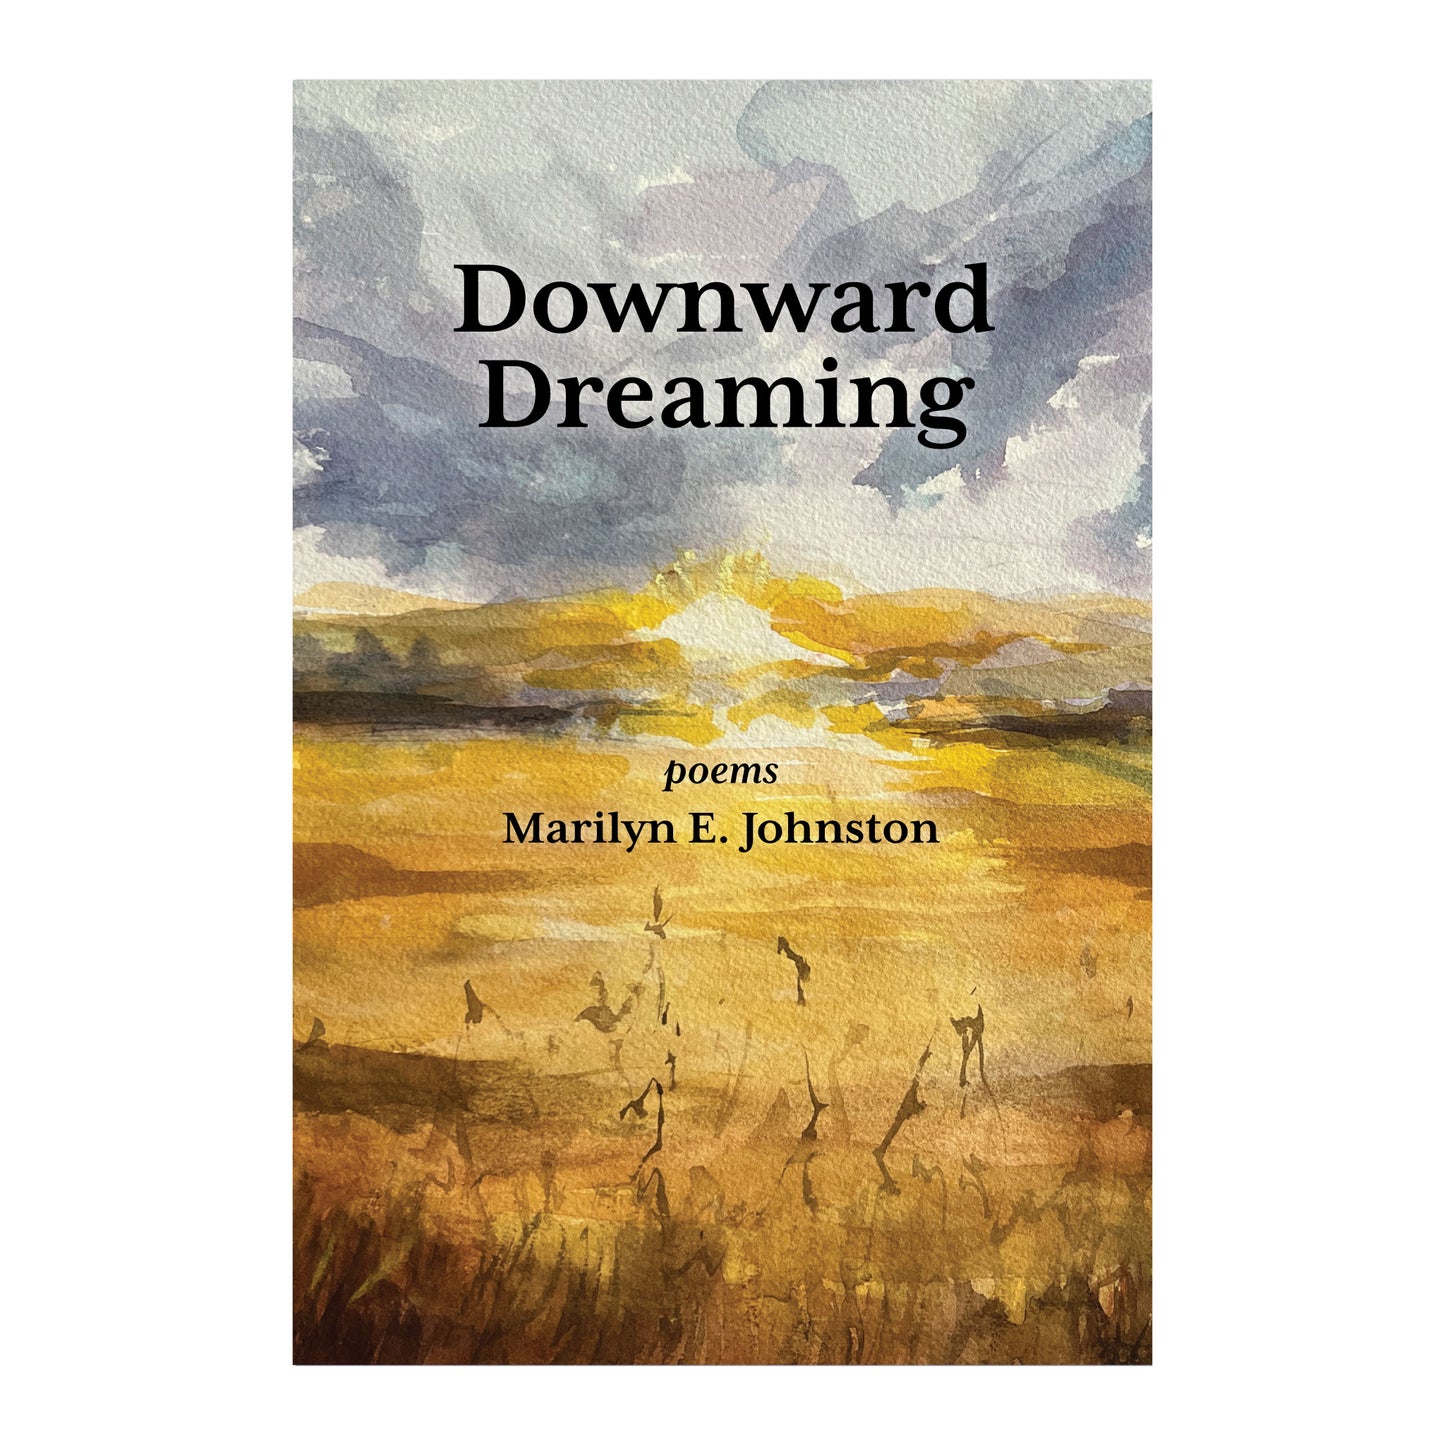 Downward Dreaming by Marilyn E. Johnston